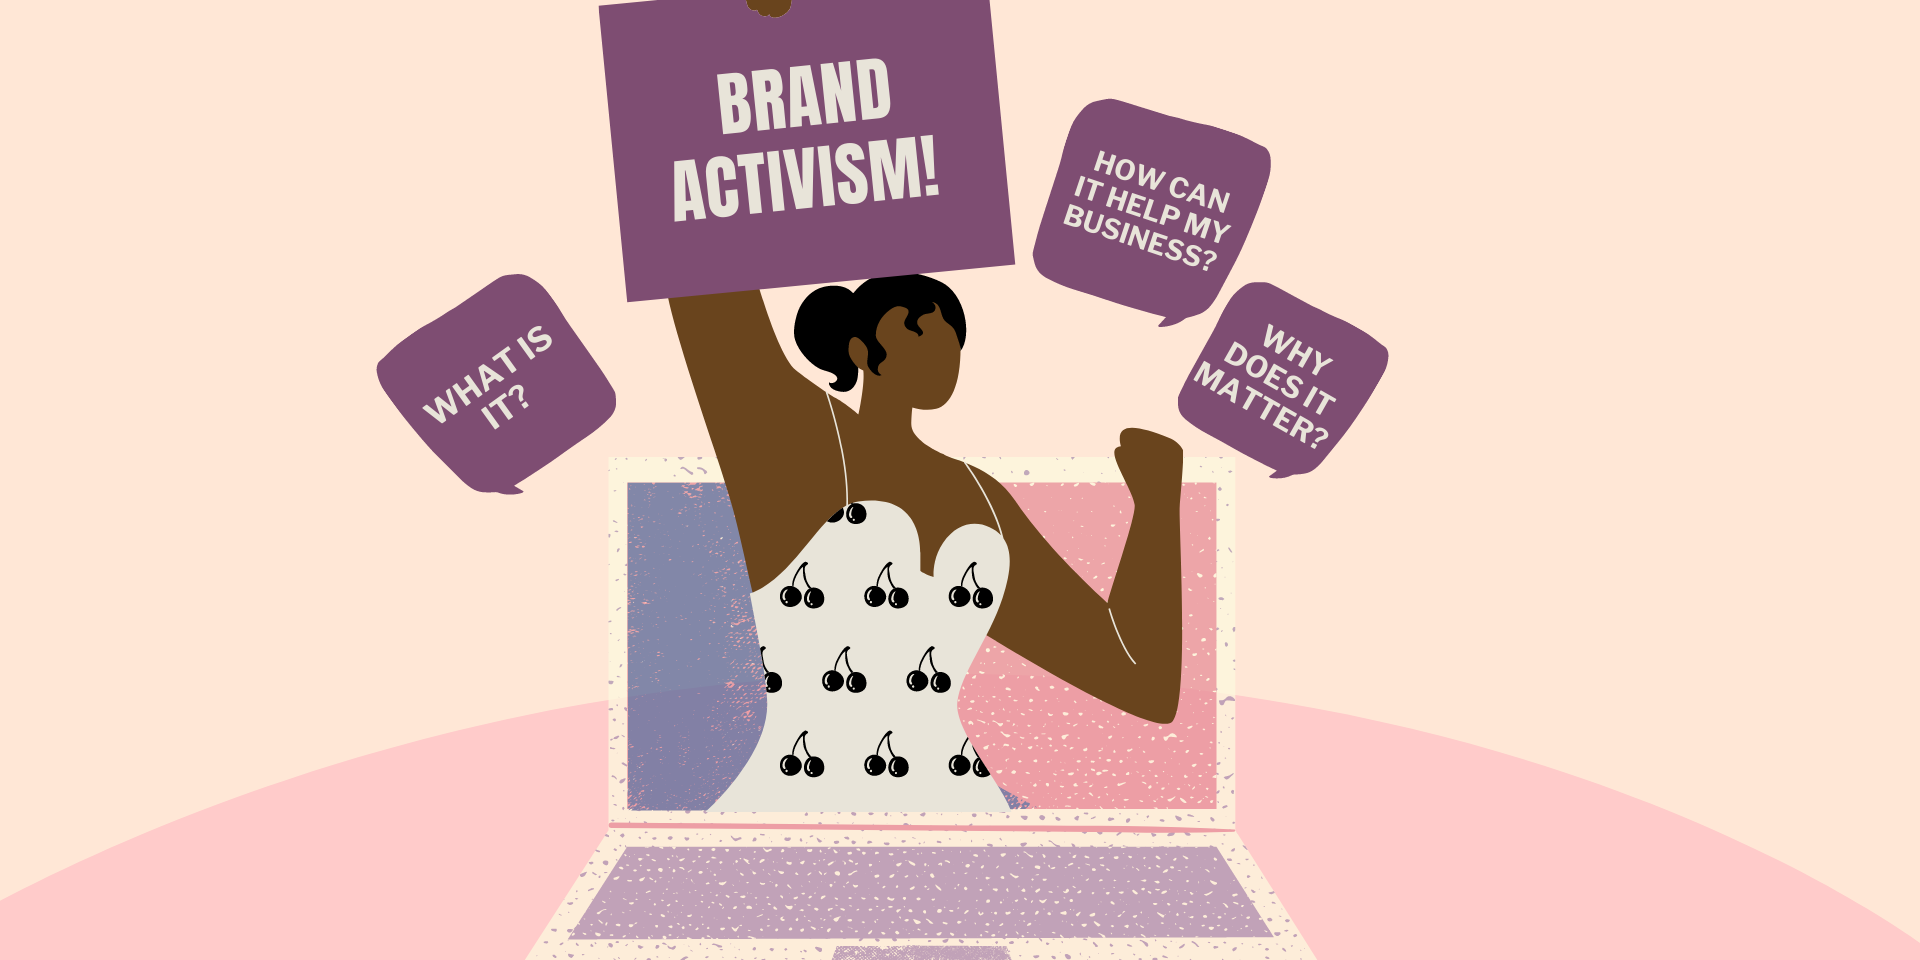 Brand activism